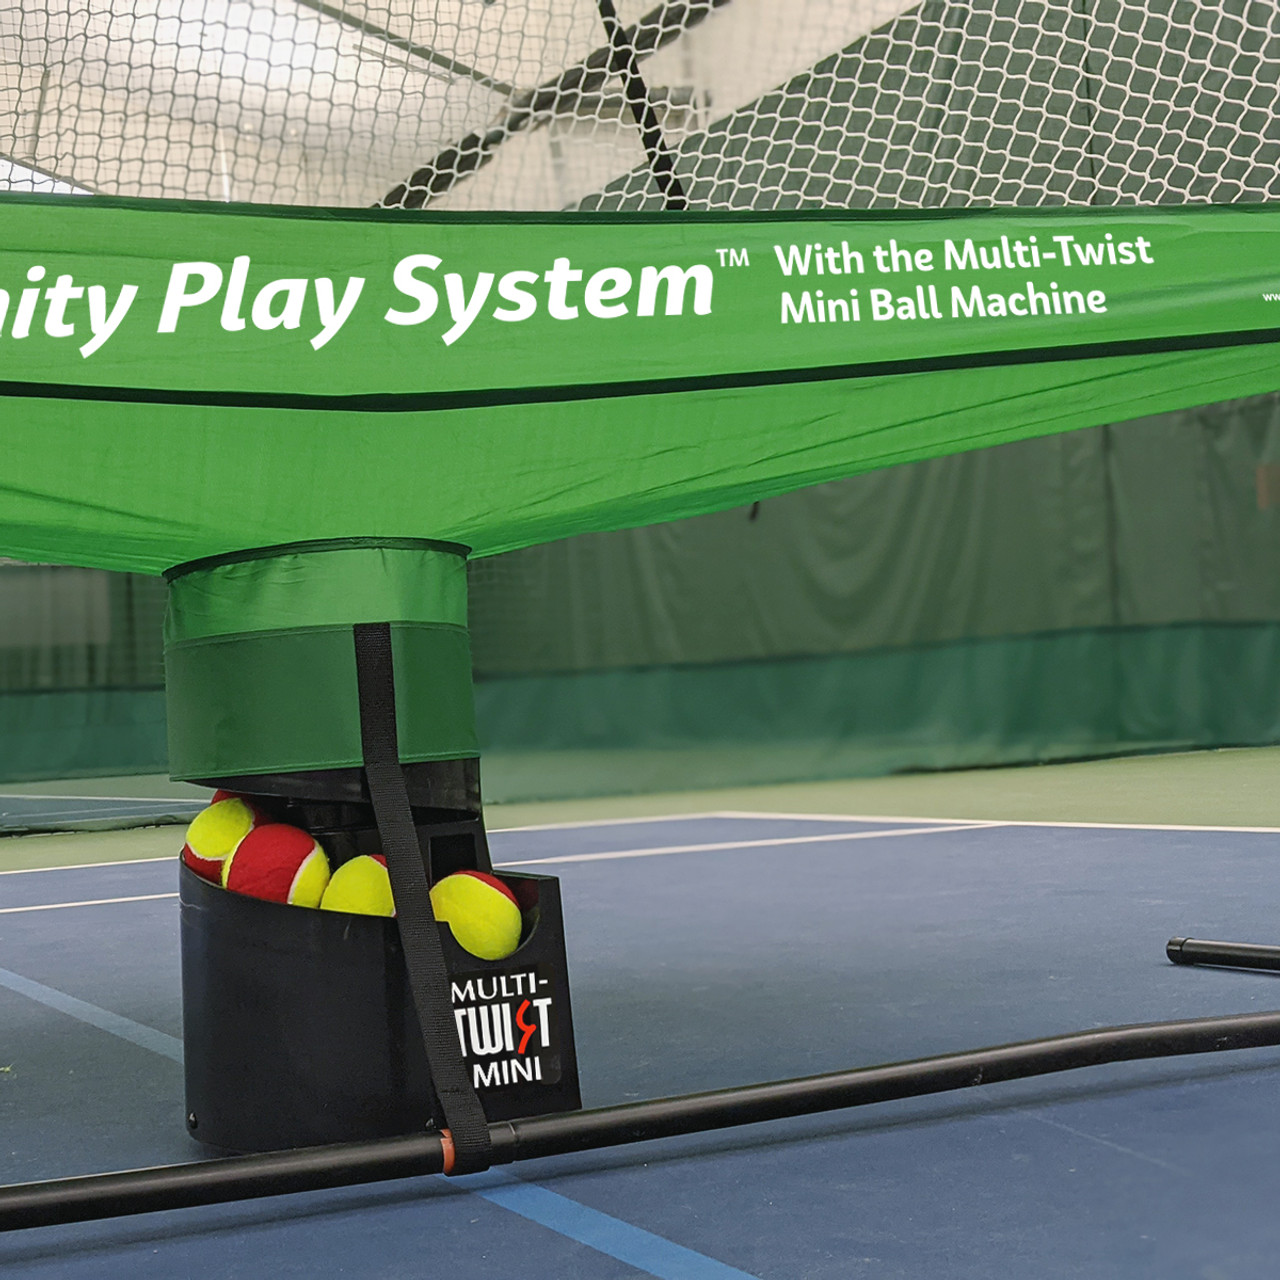 Infinity Play System with the Multi-Twist Mini Ball Machine - OnCourt  OffCourt